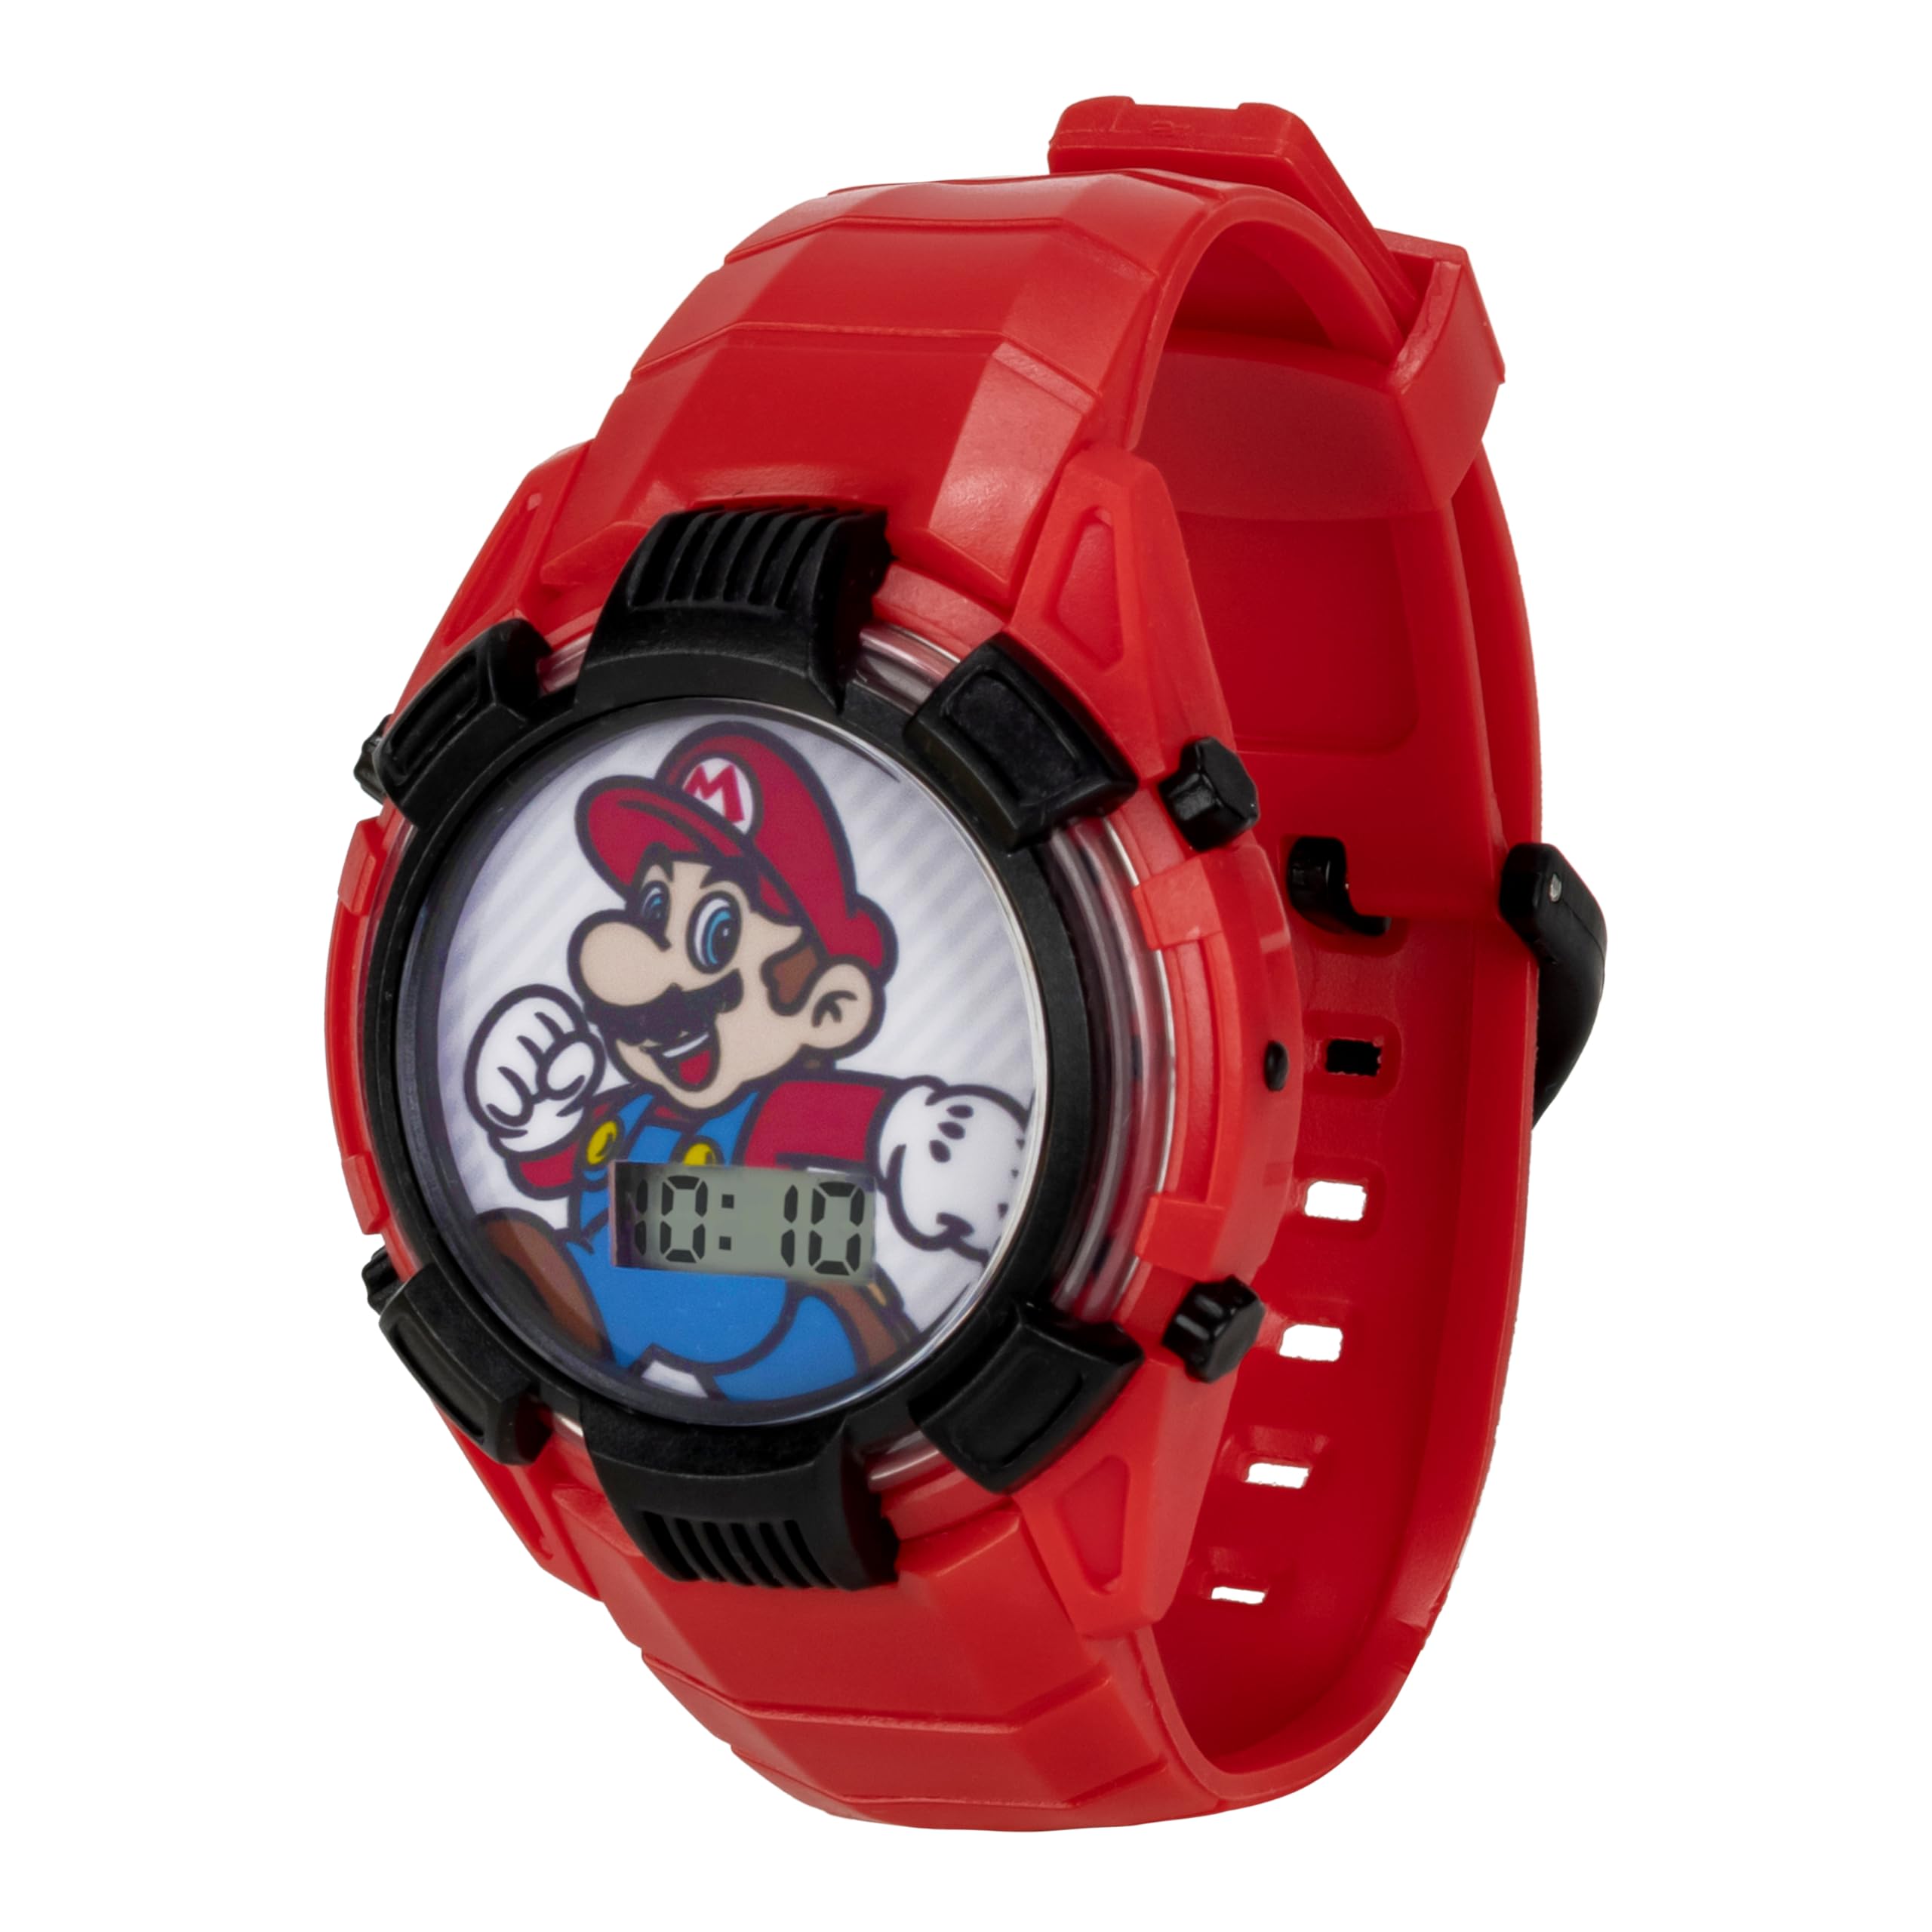 Accutime Kids Nintendo Super Mario Digital Flashing LCD Quartz Childrens Wrist Watch for Boys, Girls, Toddlers with Red Strap (Model: GMA4038AZ)